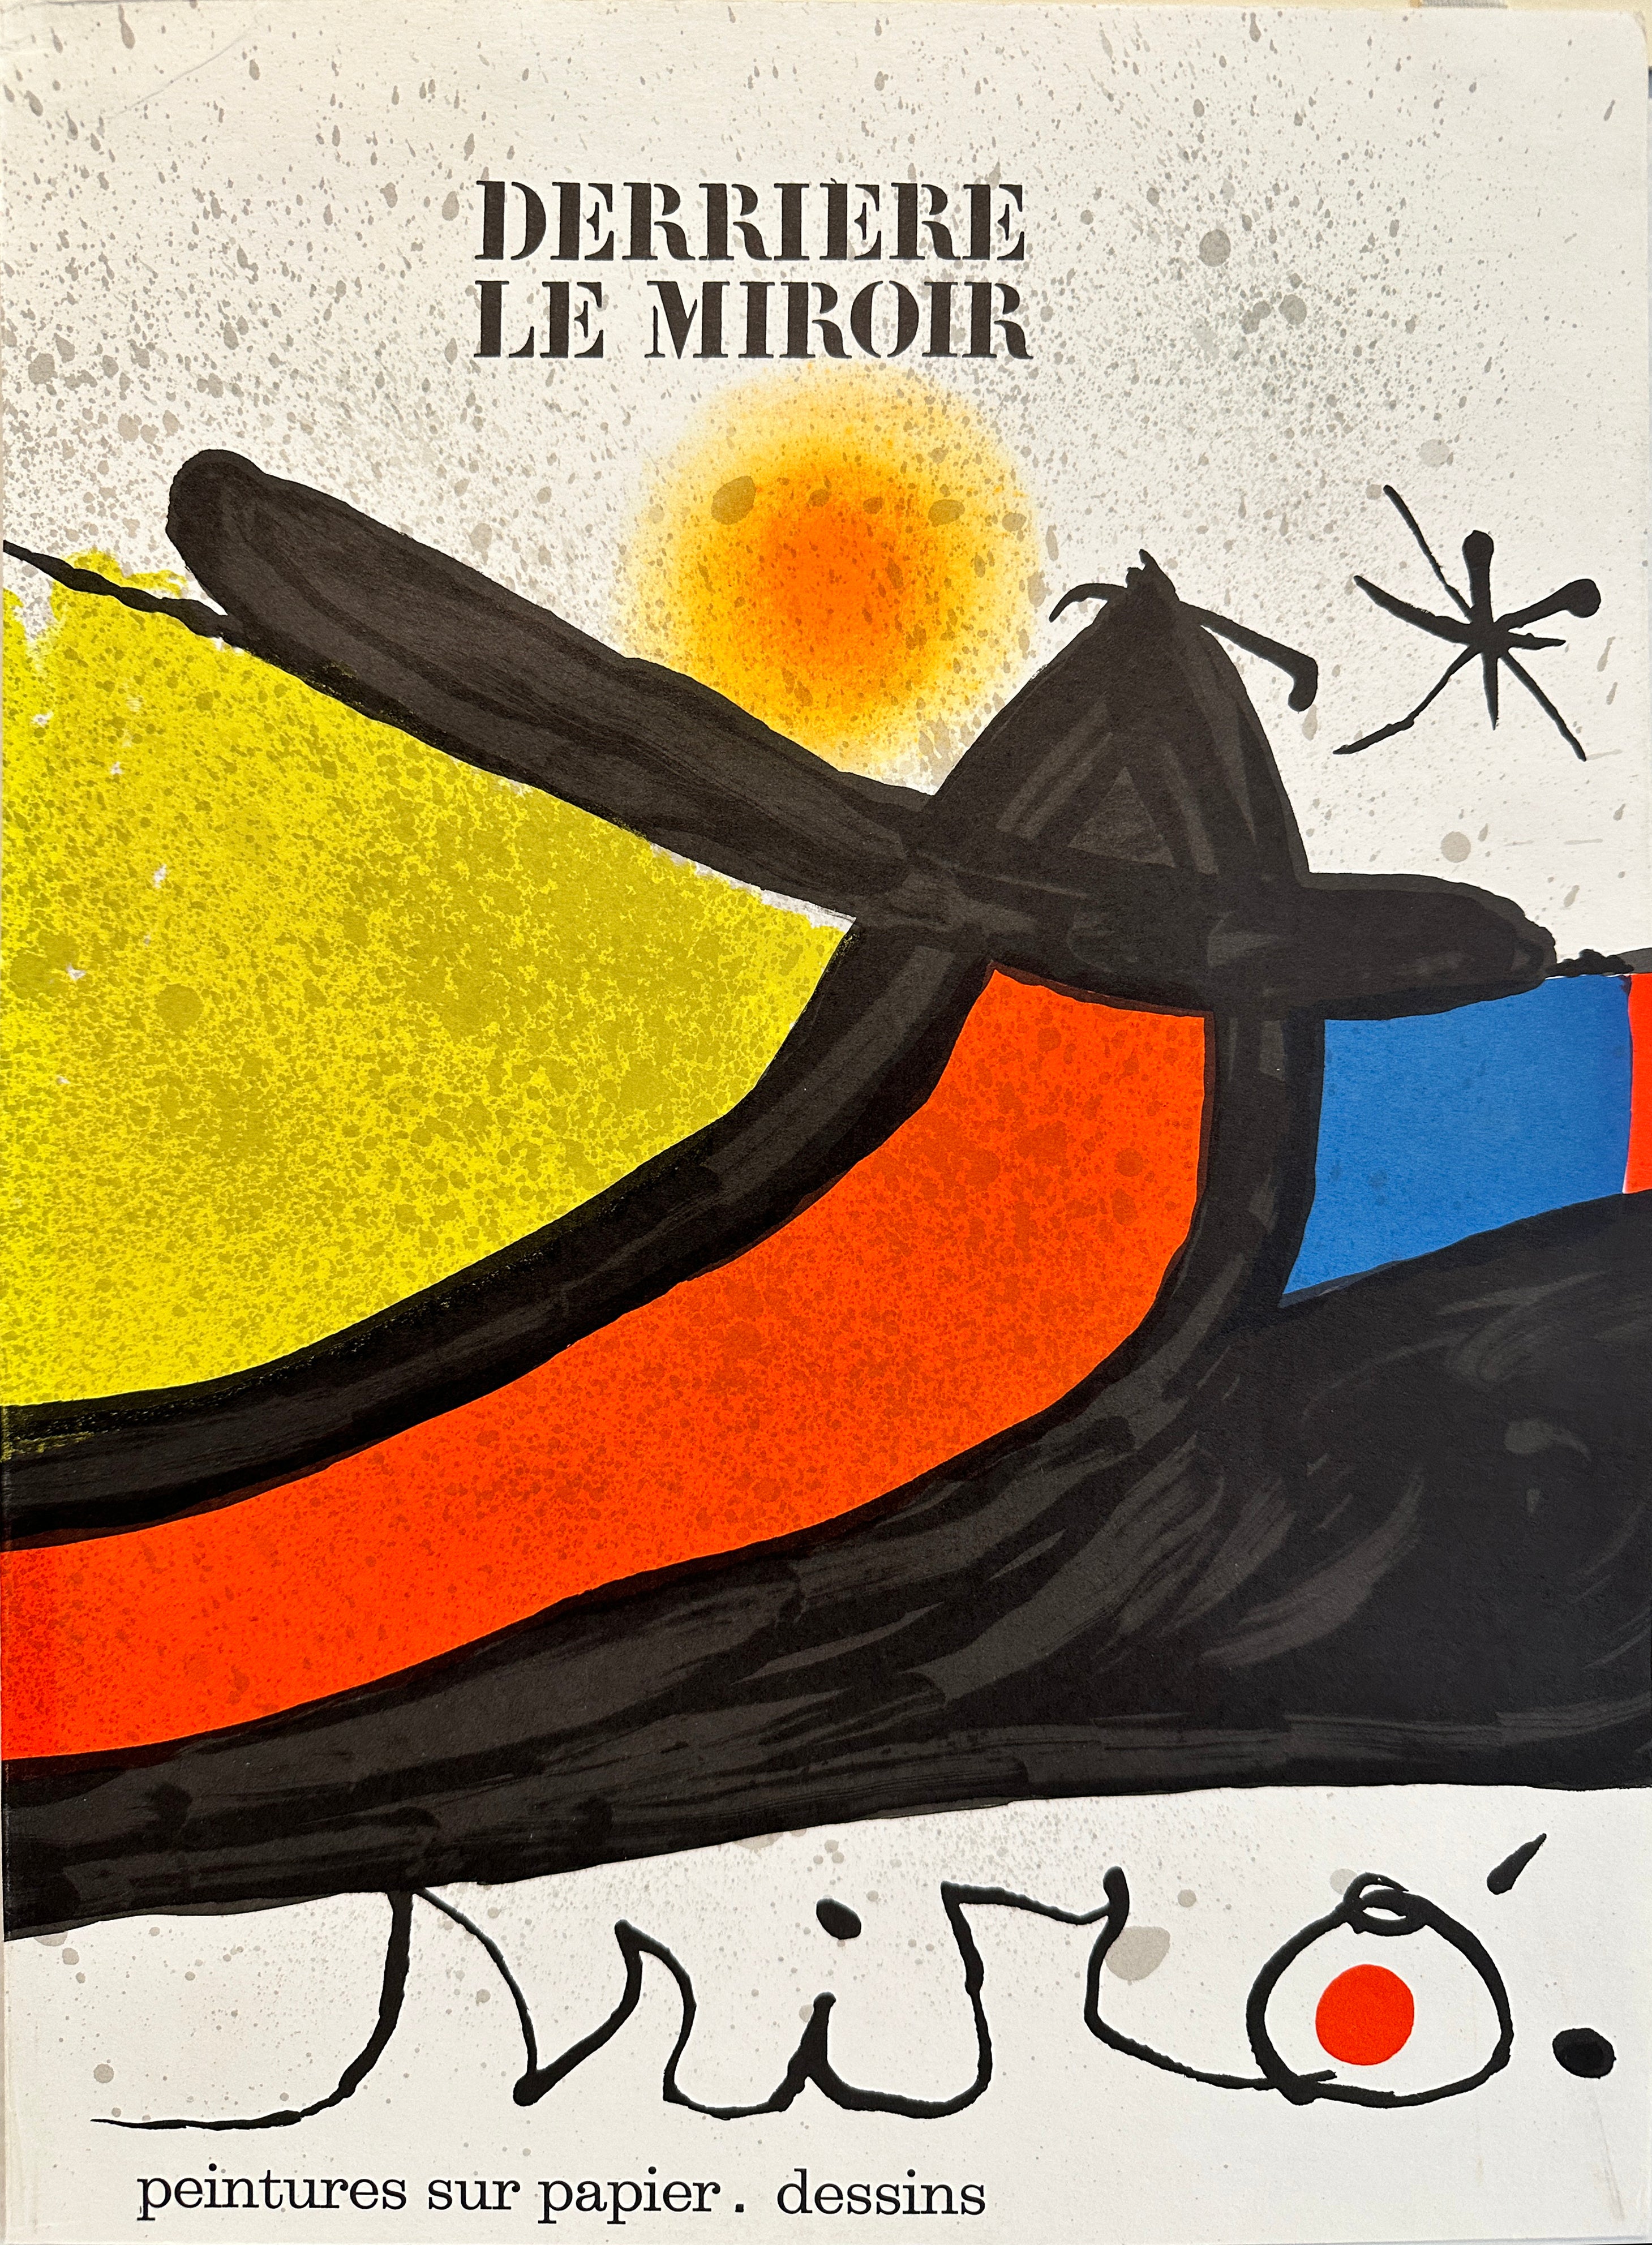 Joan Miro Lithograph: Derriere Le Miroir 193-194